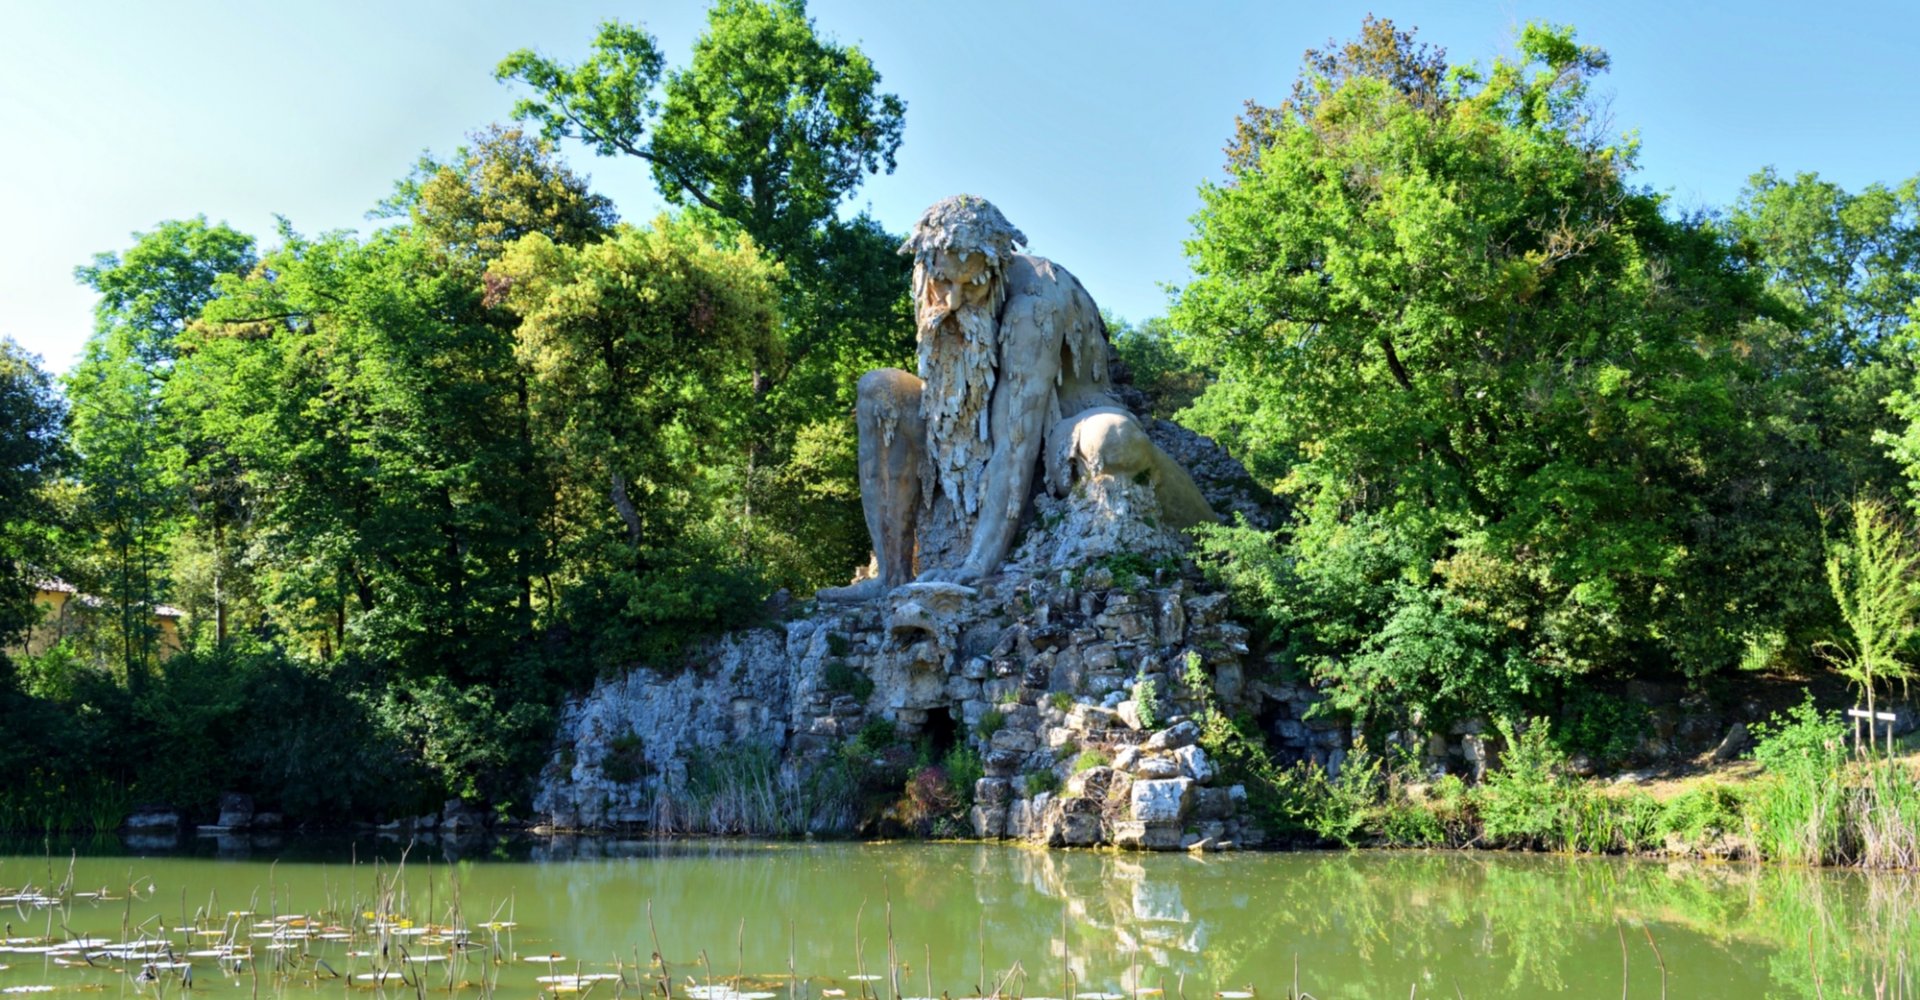 The Apennine Colossus by Giambologna